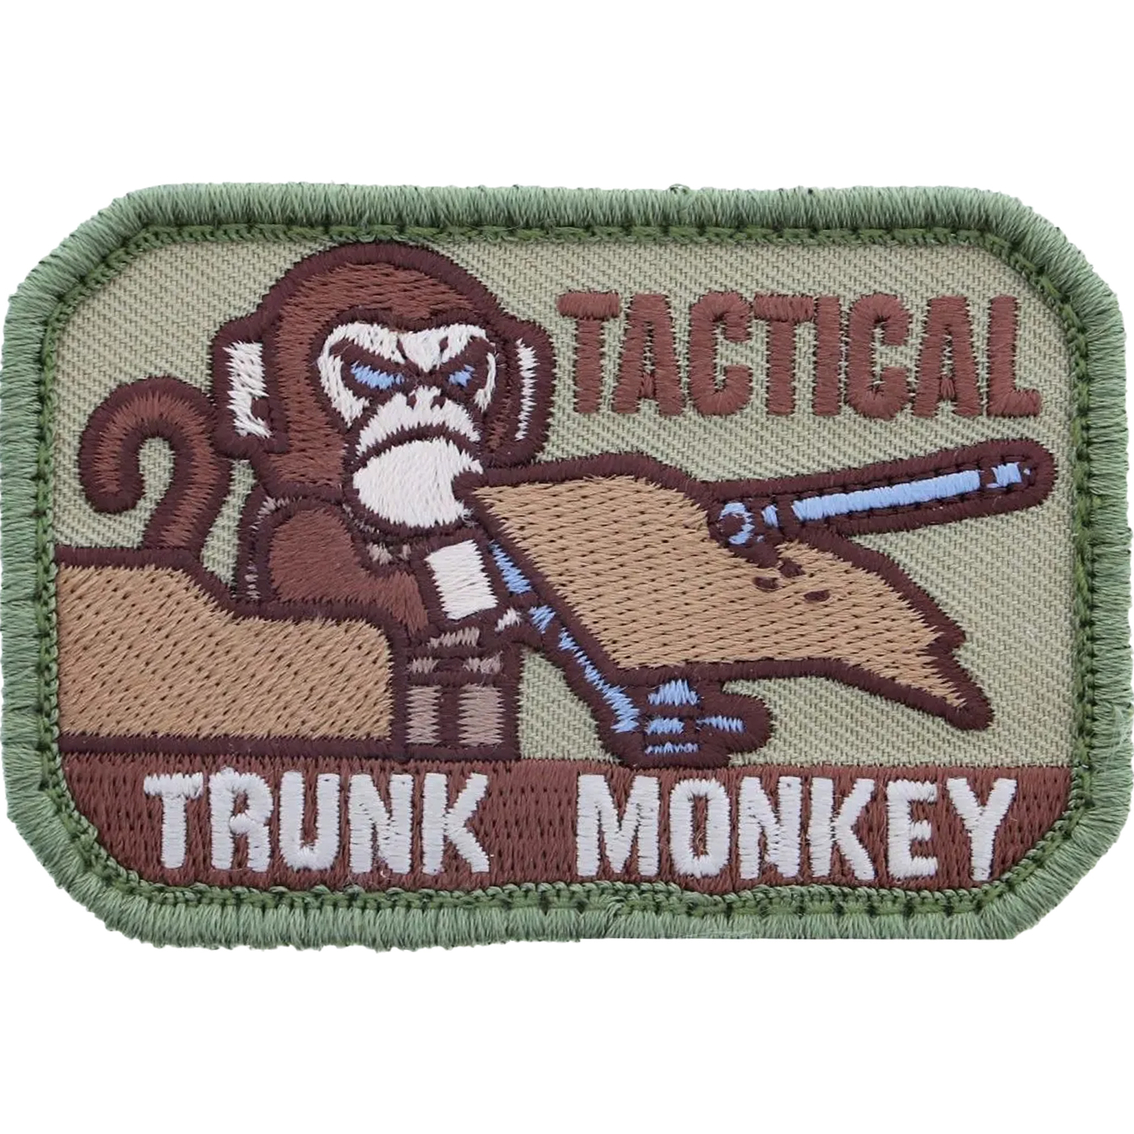 Brigade Qm Mil-spec Monkey Morale Patch: Tactical Trunk Monkey Multicam ...